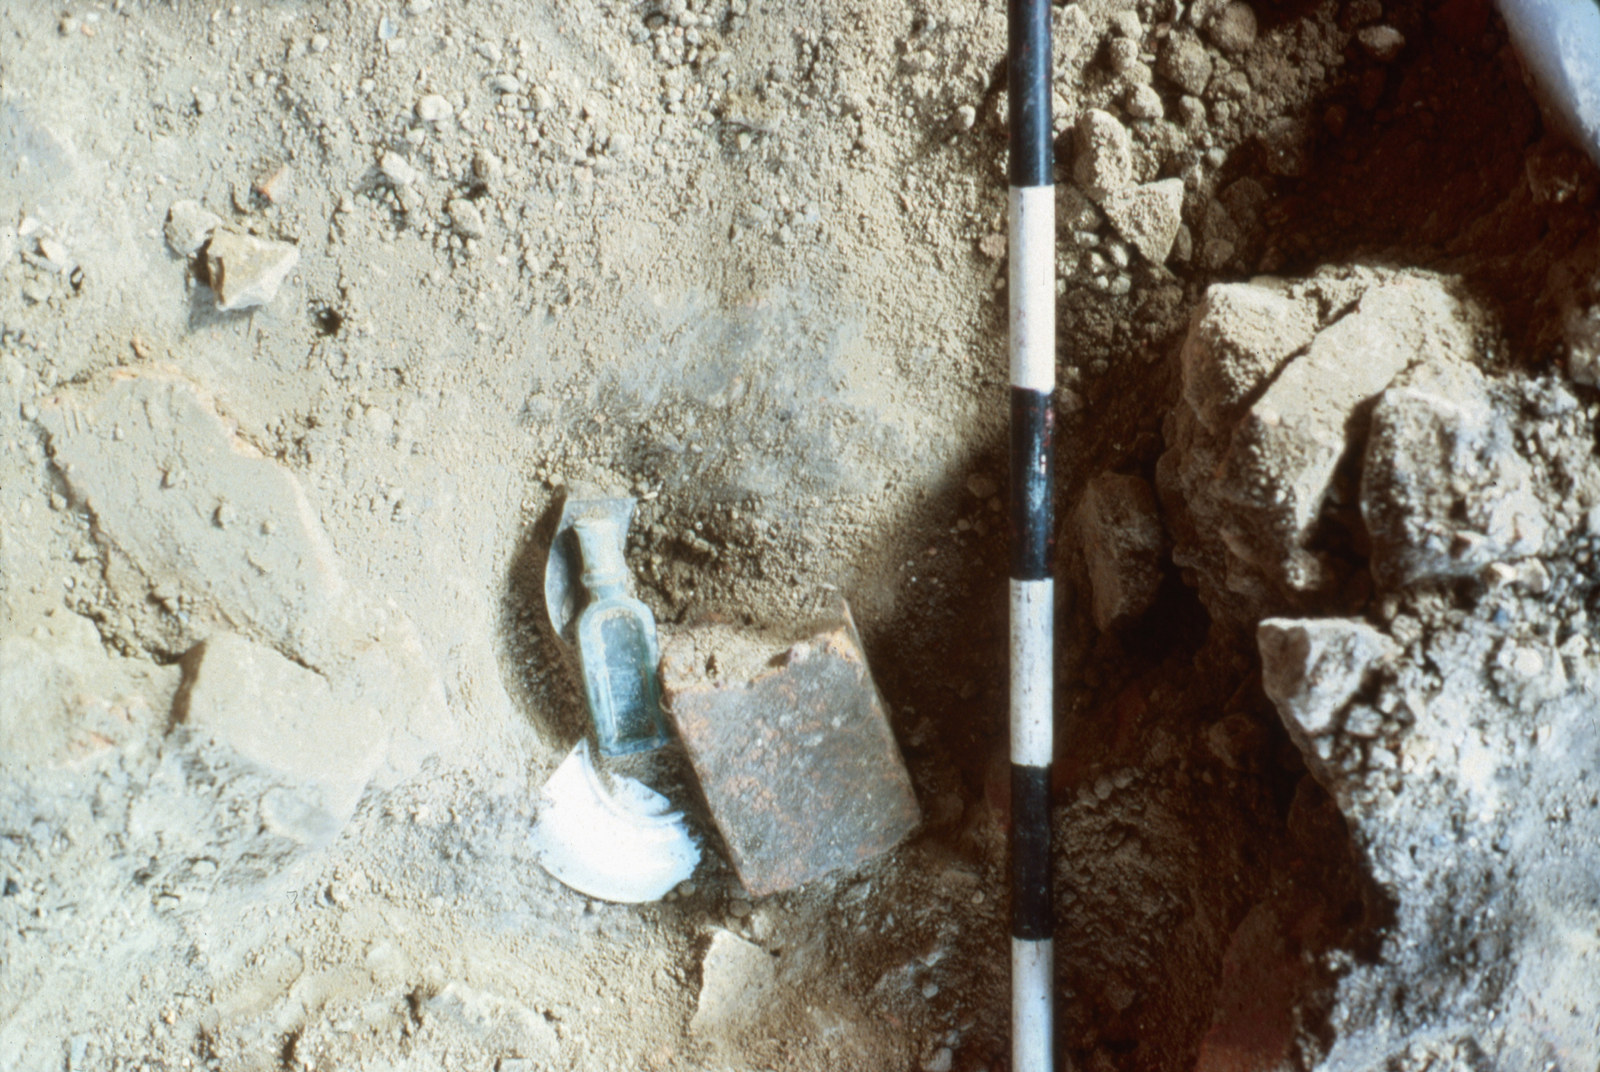 Finds in situ before excavation, ground floor of Hyde Park Barracks, 1981.